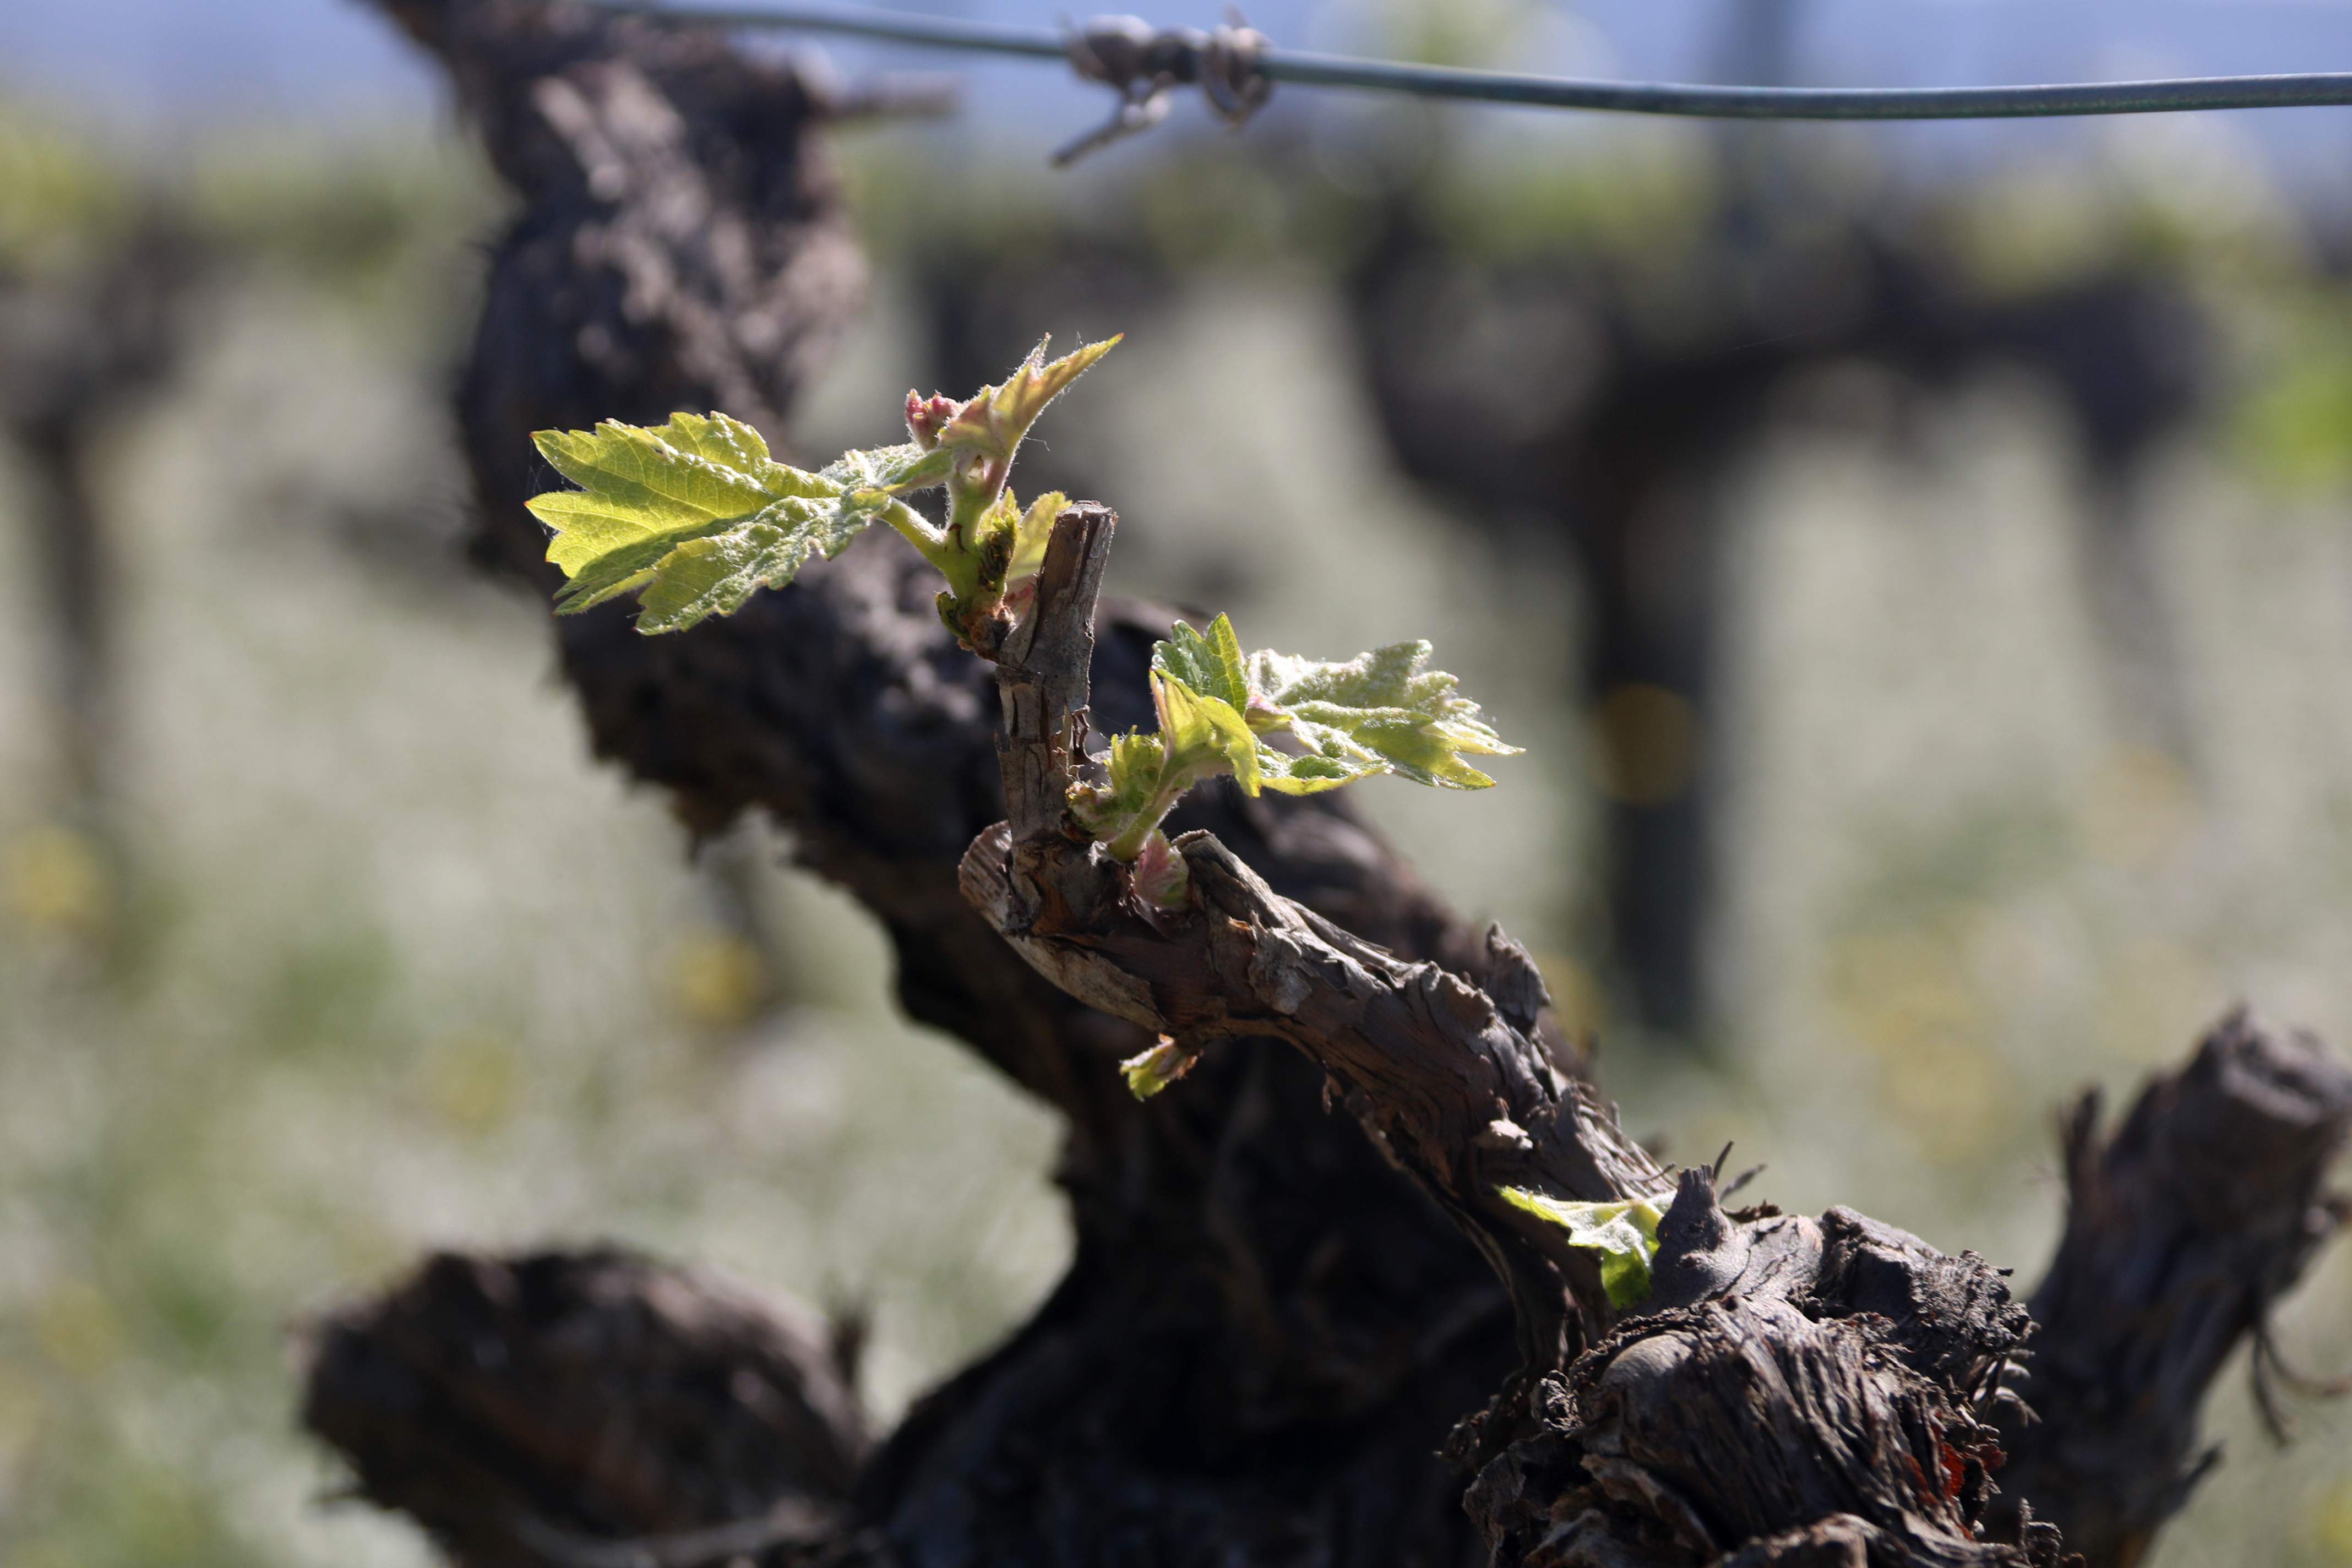 La DO cava incorporará uva de viñas no registradas para atenuar las malas cosechas